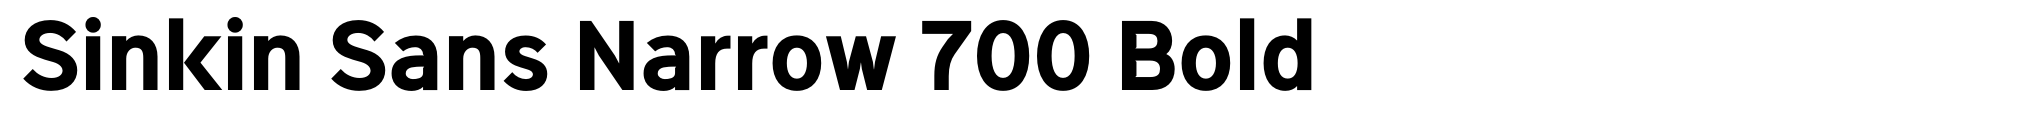 Sinkin Sans Narrow 700 Bold image